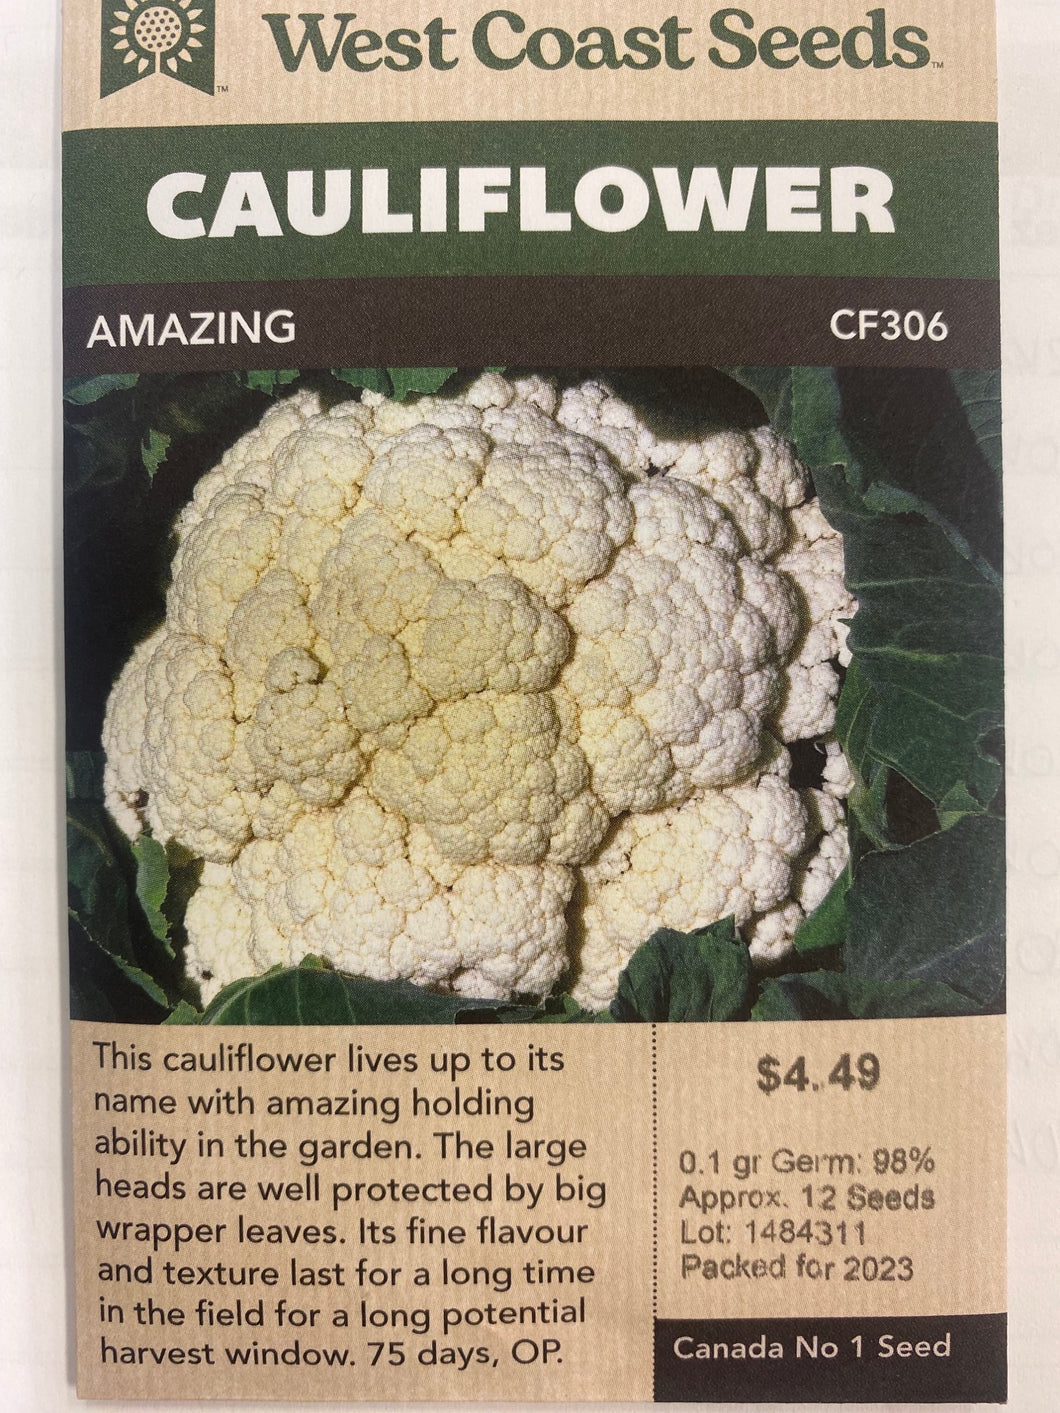 Cauliflower - Amazing 0.1gr